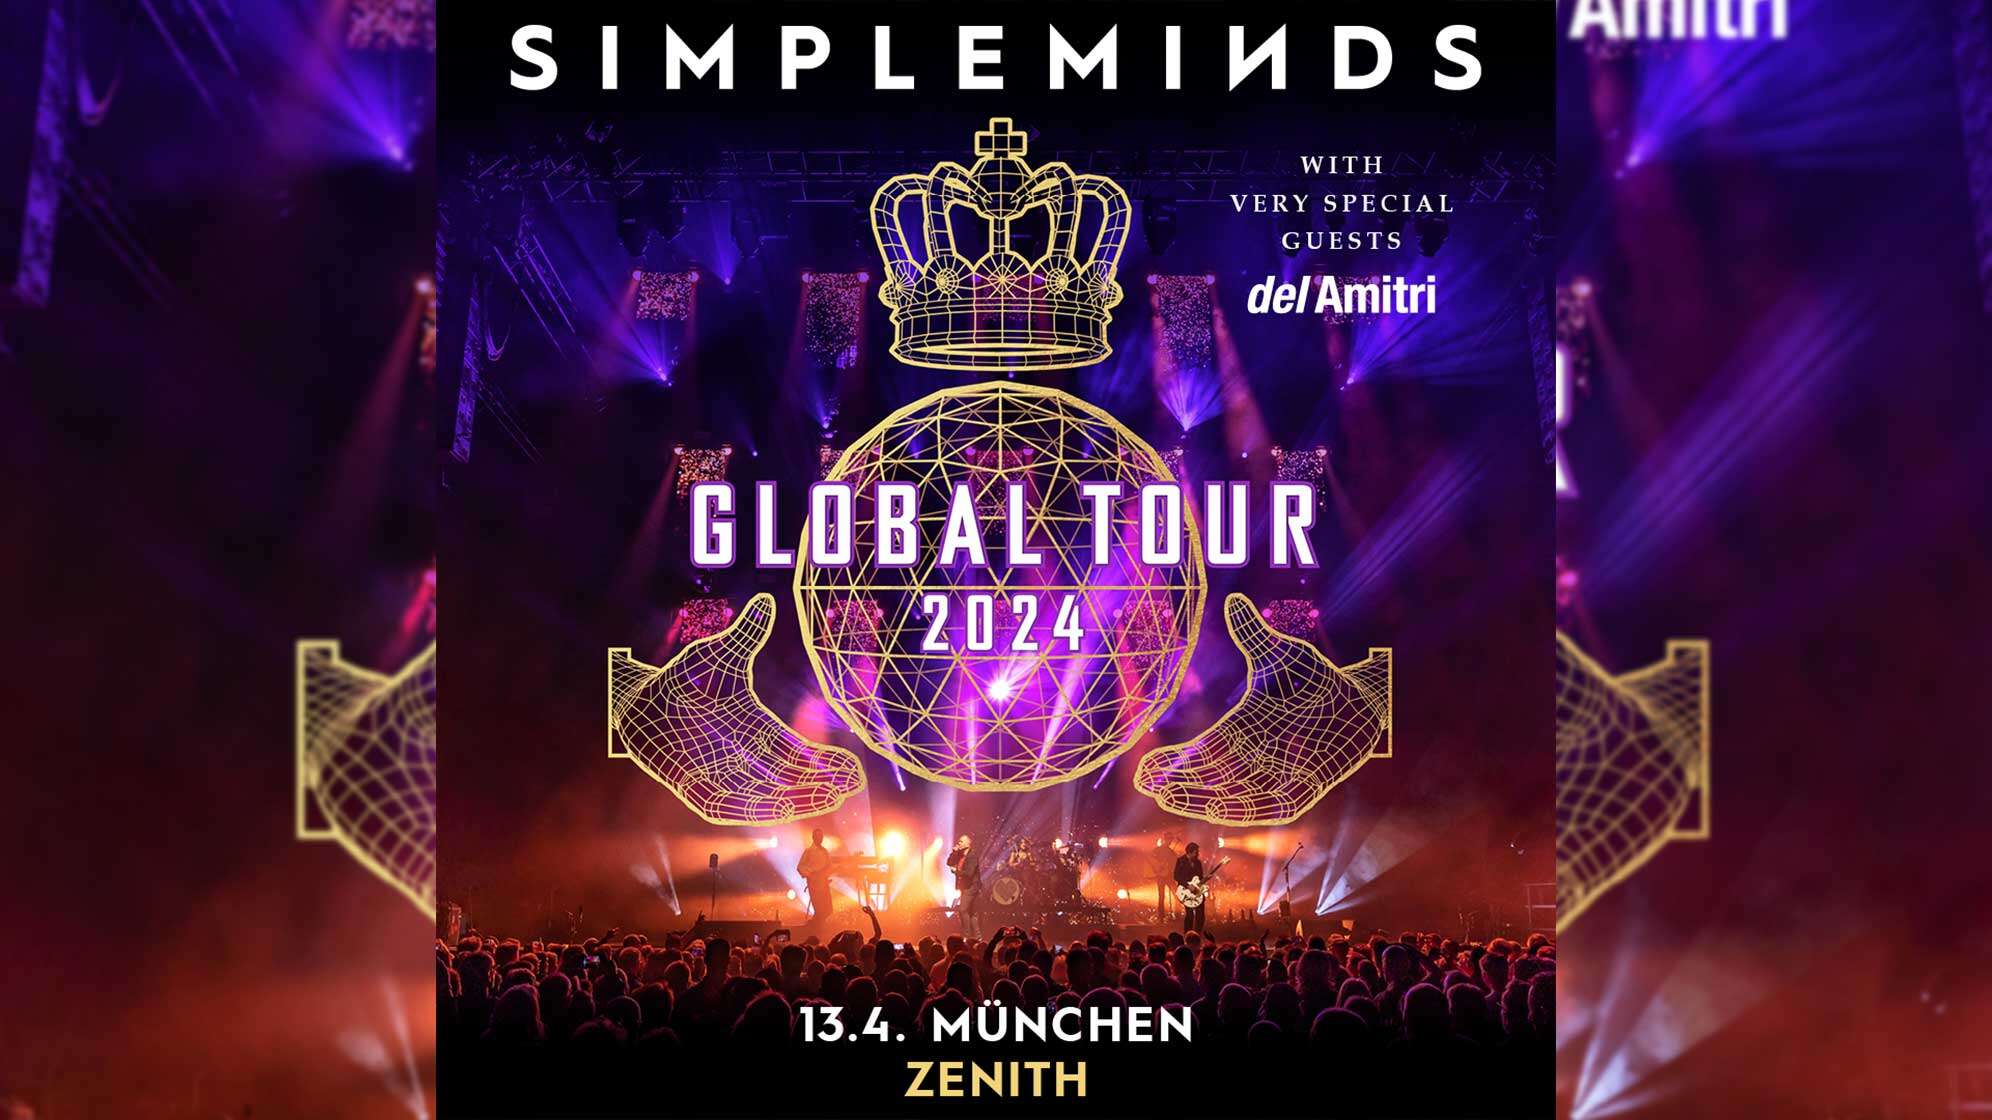 Tourplakat von Simple Minds